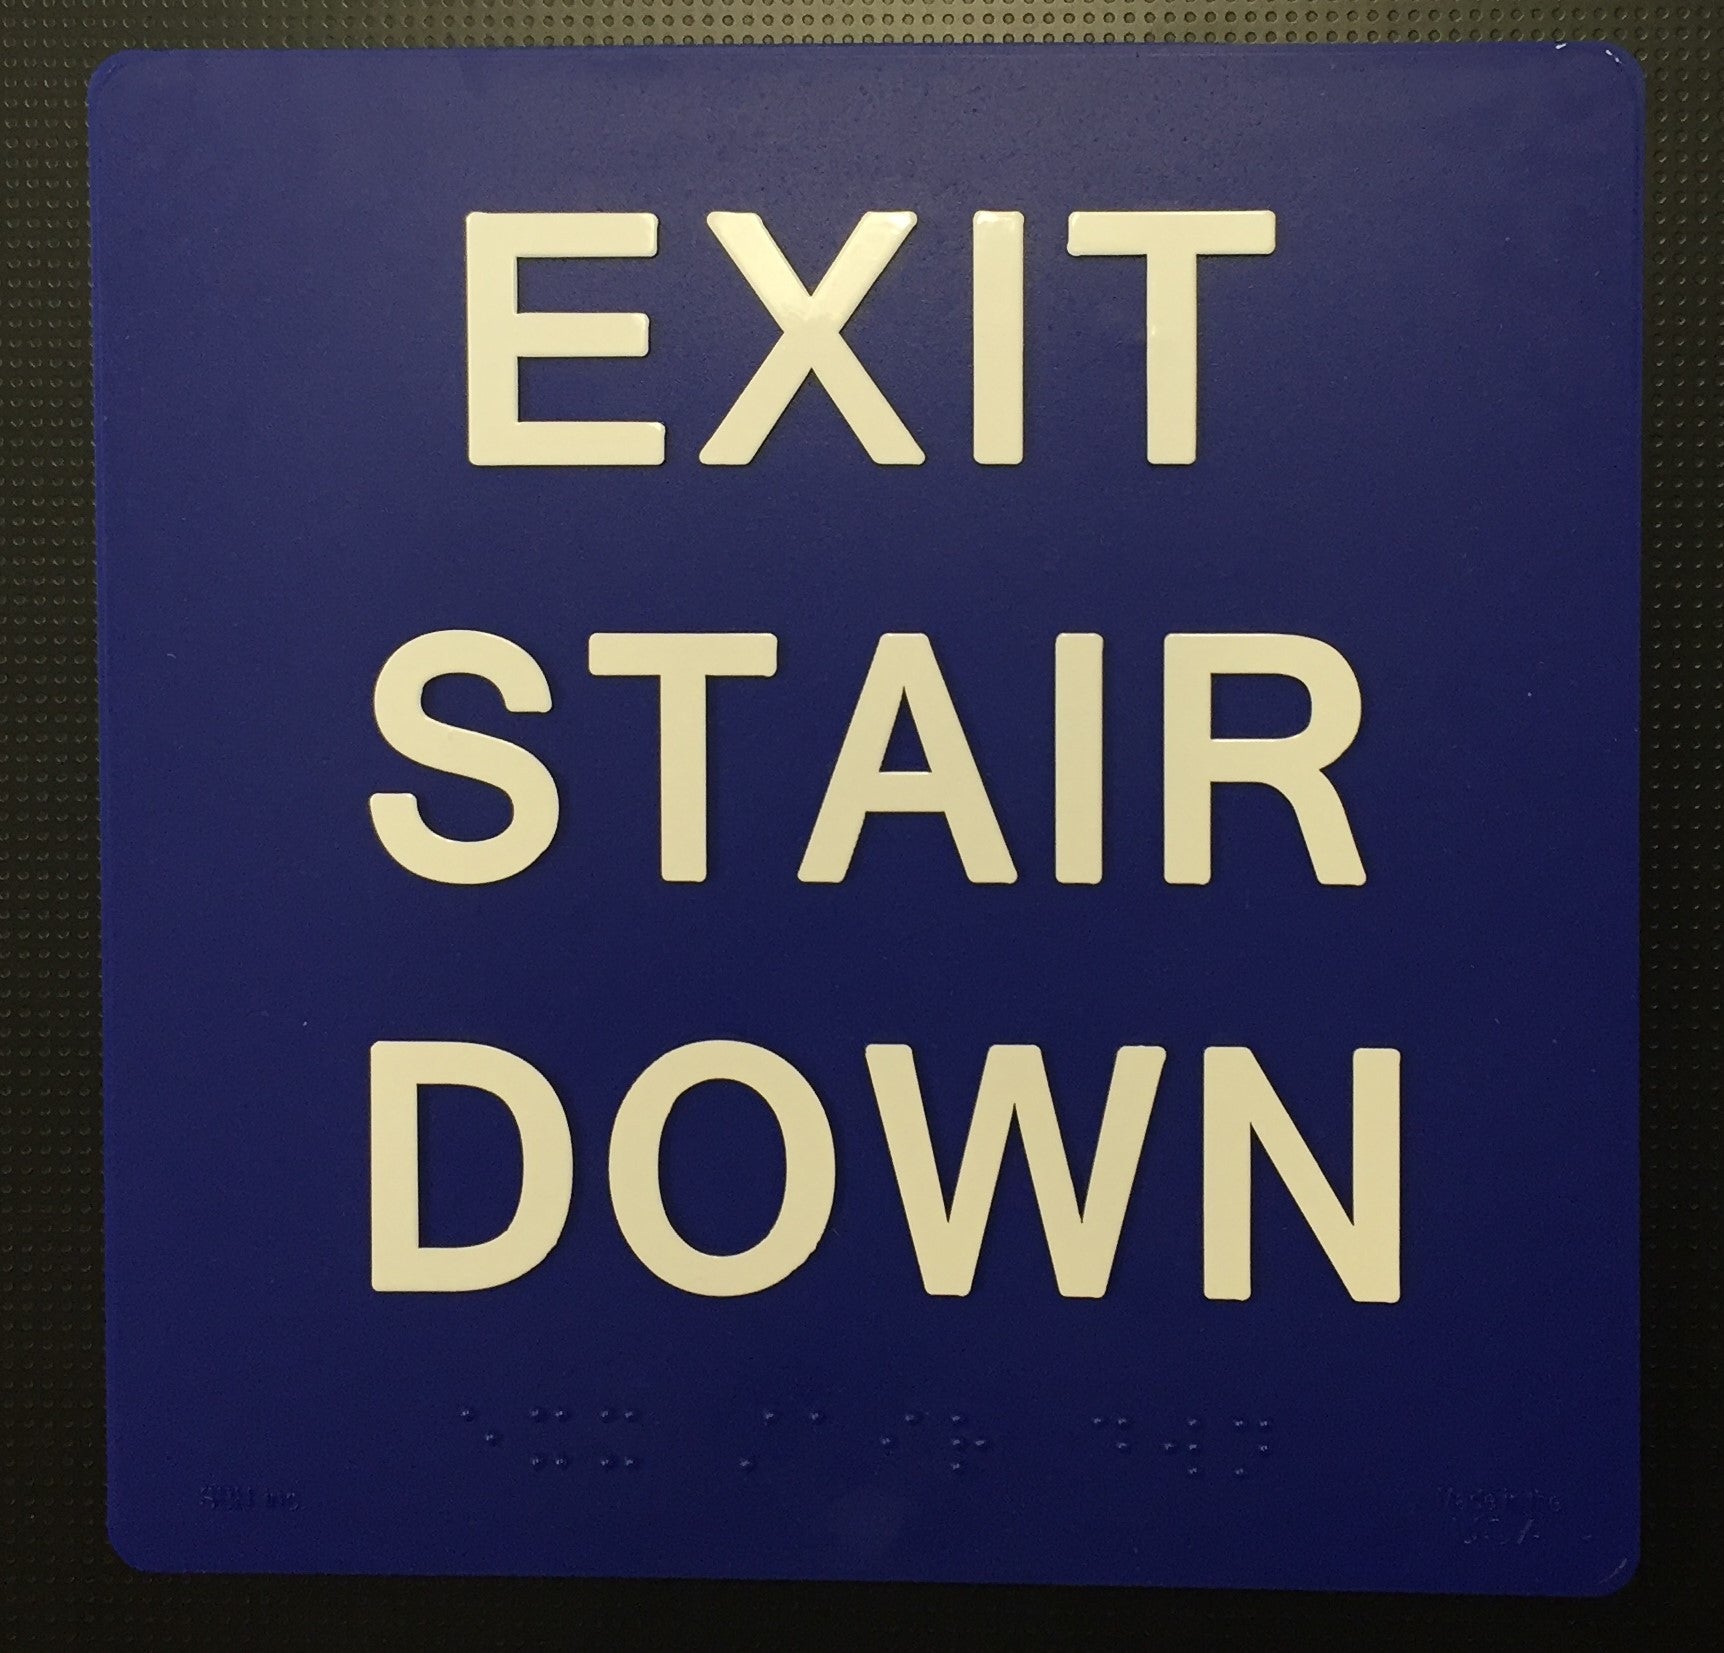 Exit Stair Down 6" x 6" Blue